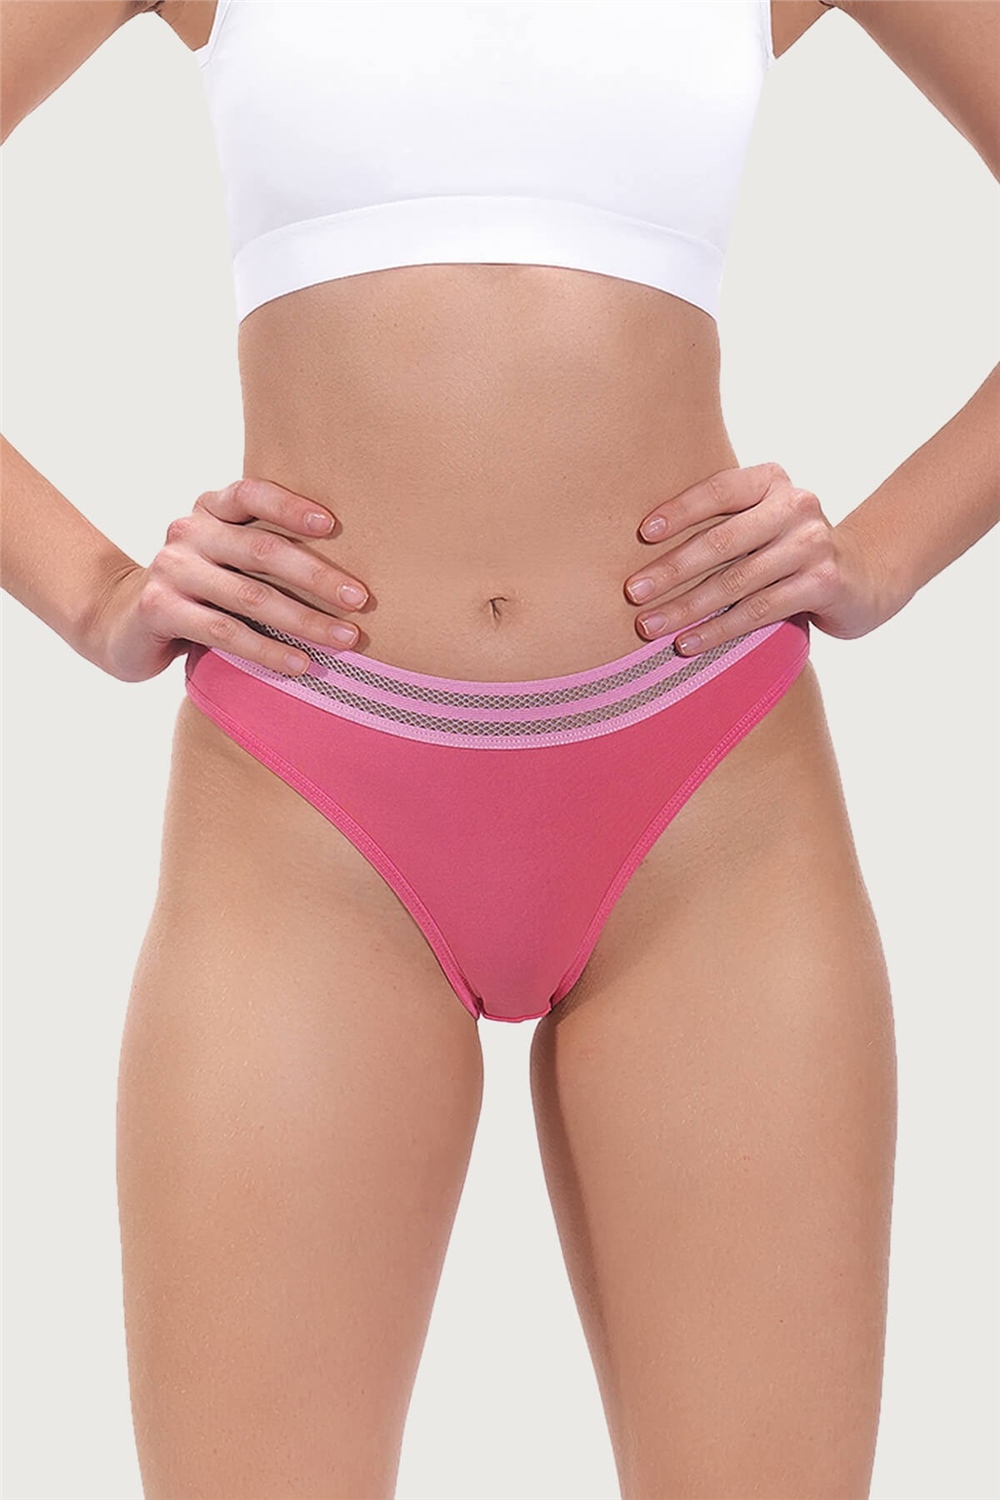 basic-spor-cotton-bikini-women-panty-with-elastic-waistband-ch0338-g-pembe-1-5